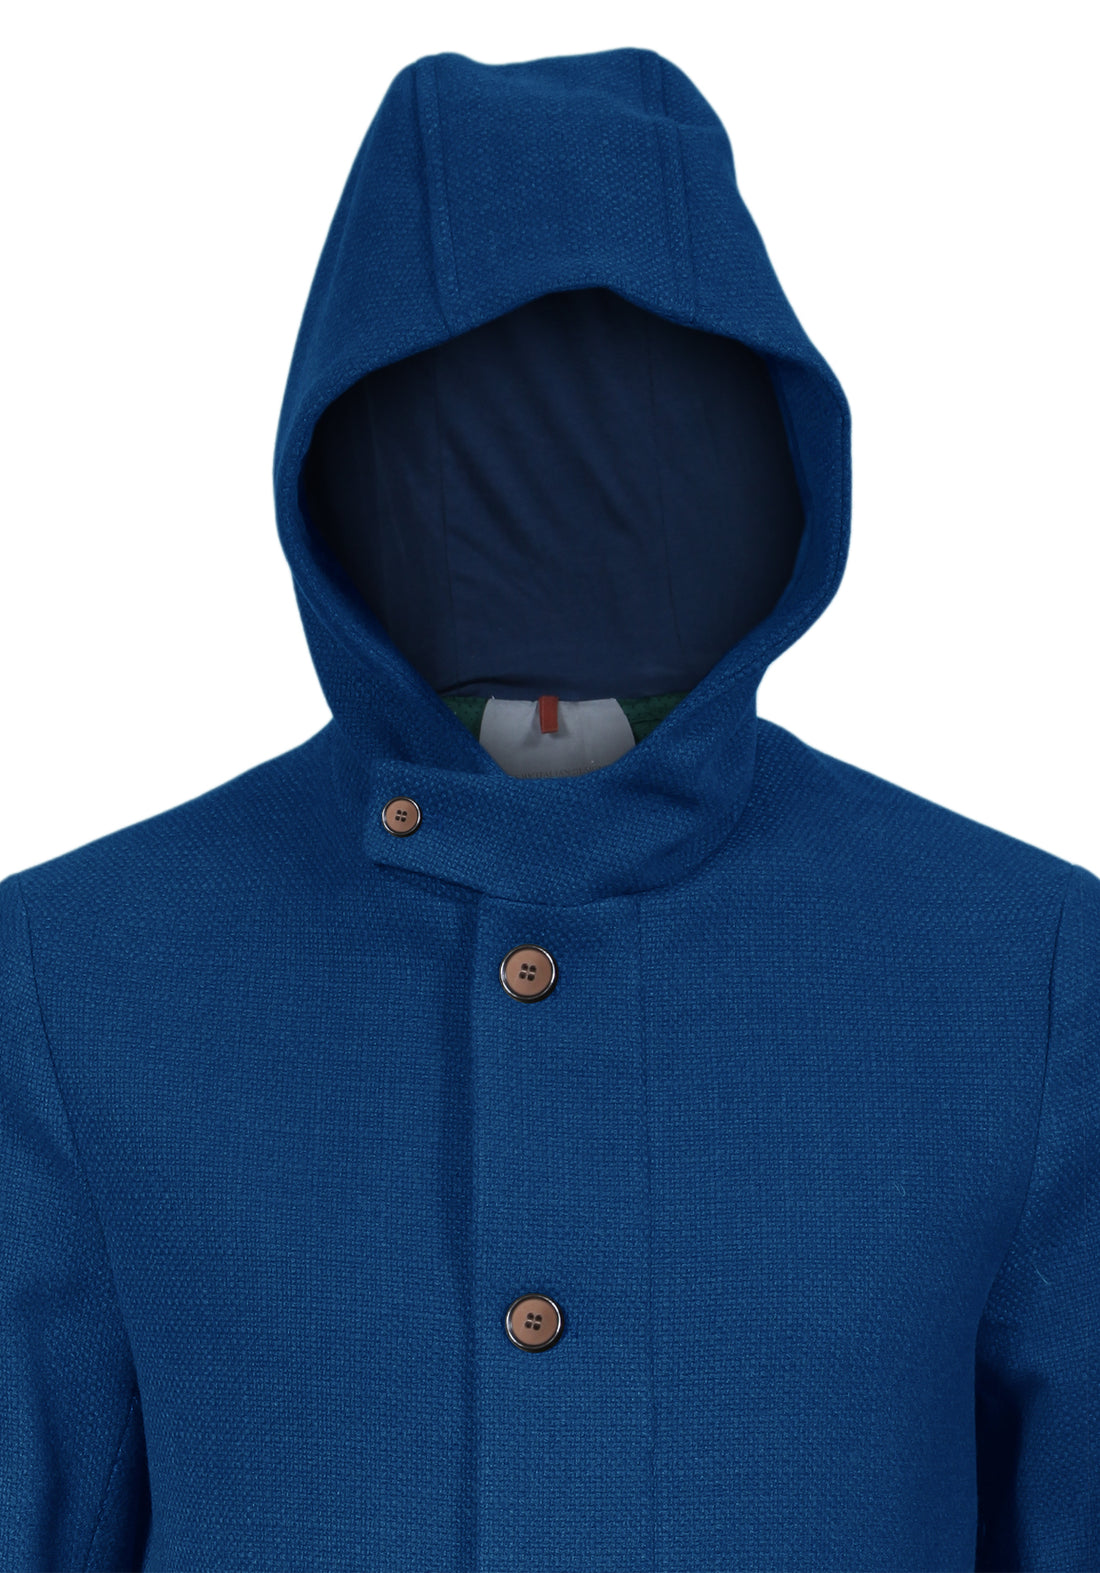 Coat with Hood - Teal -